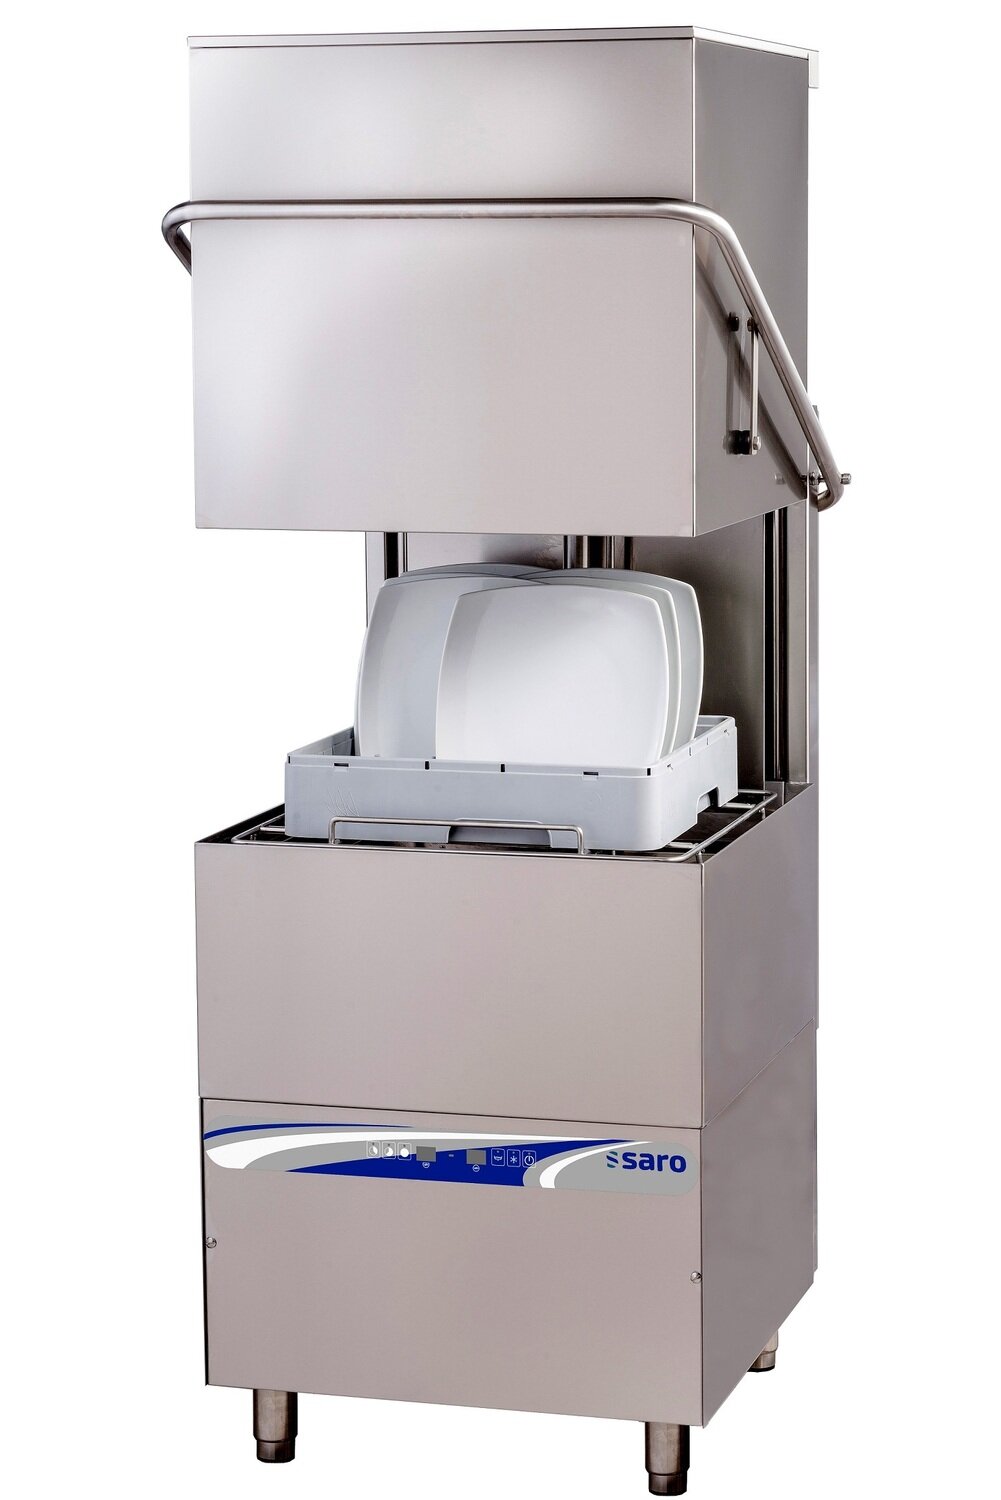 SARO Hood type dishwasher, double-walled model FRANKFURT